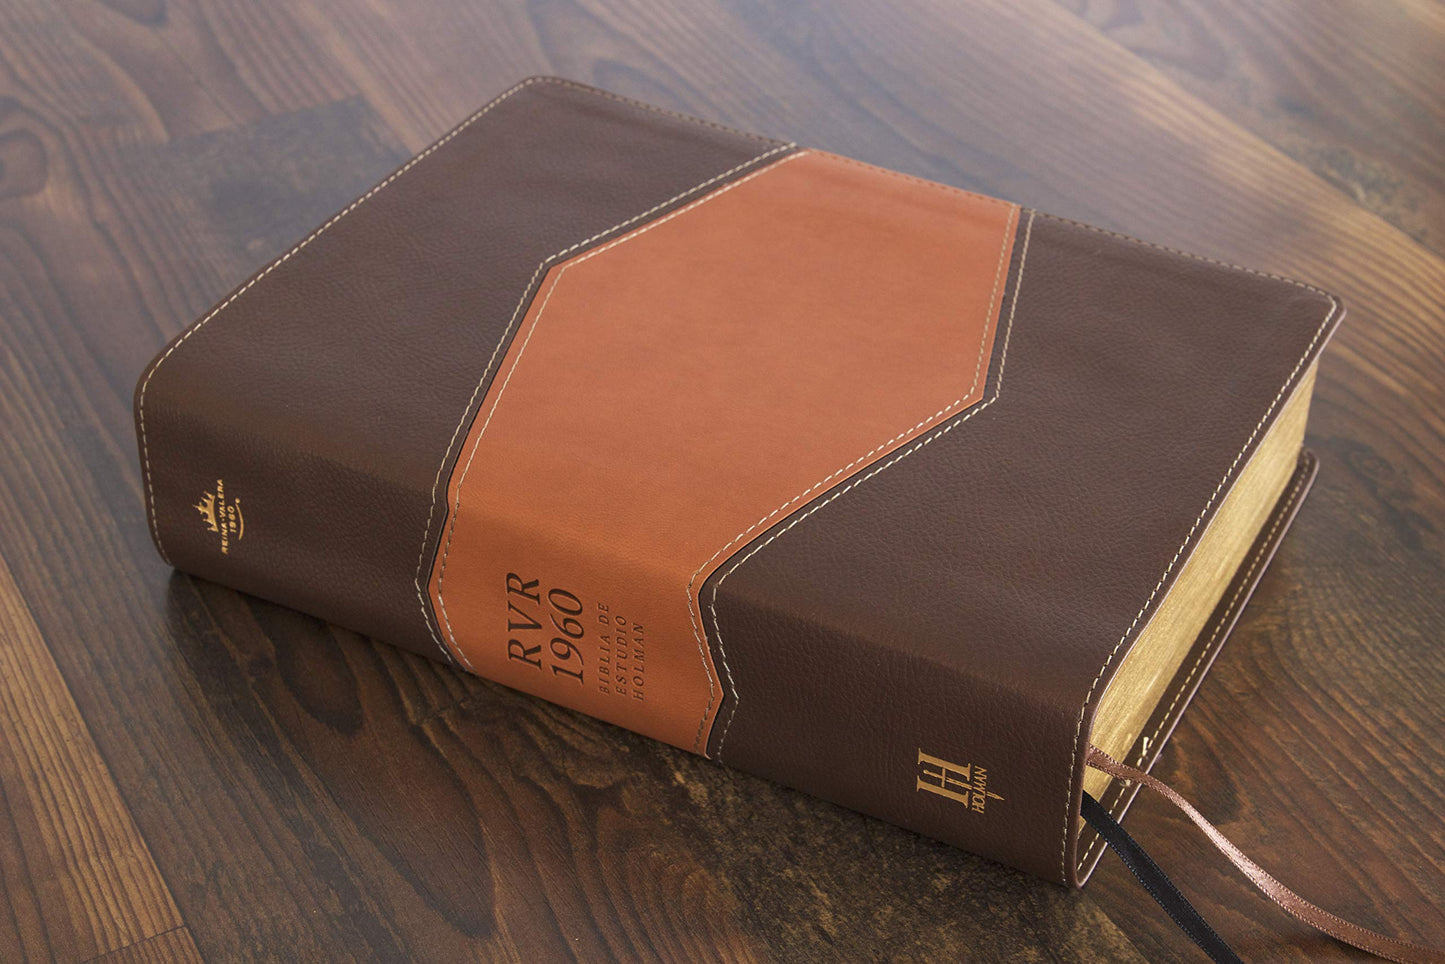 RVR 1960 Biblia de Estudio Holman, chocolate/terracota, símil piel (Spanish Edition)